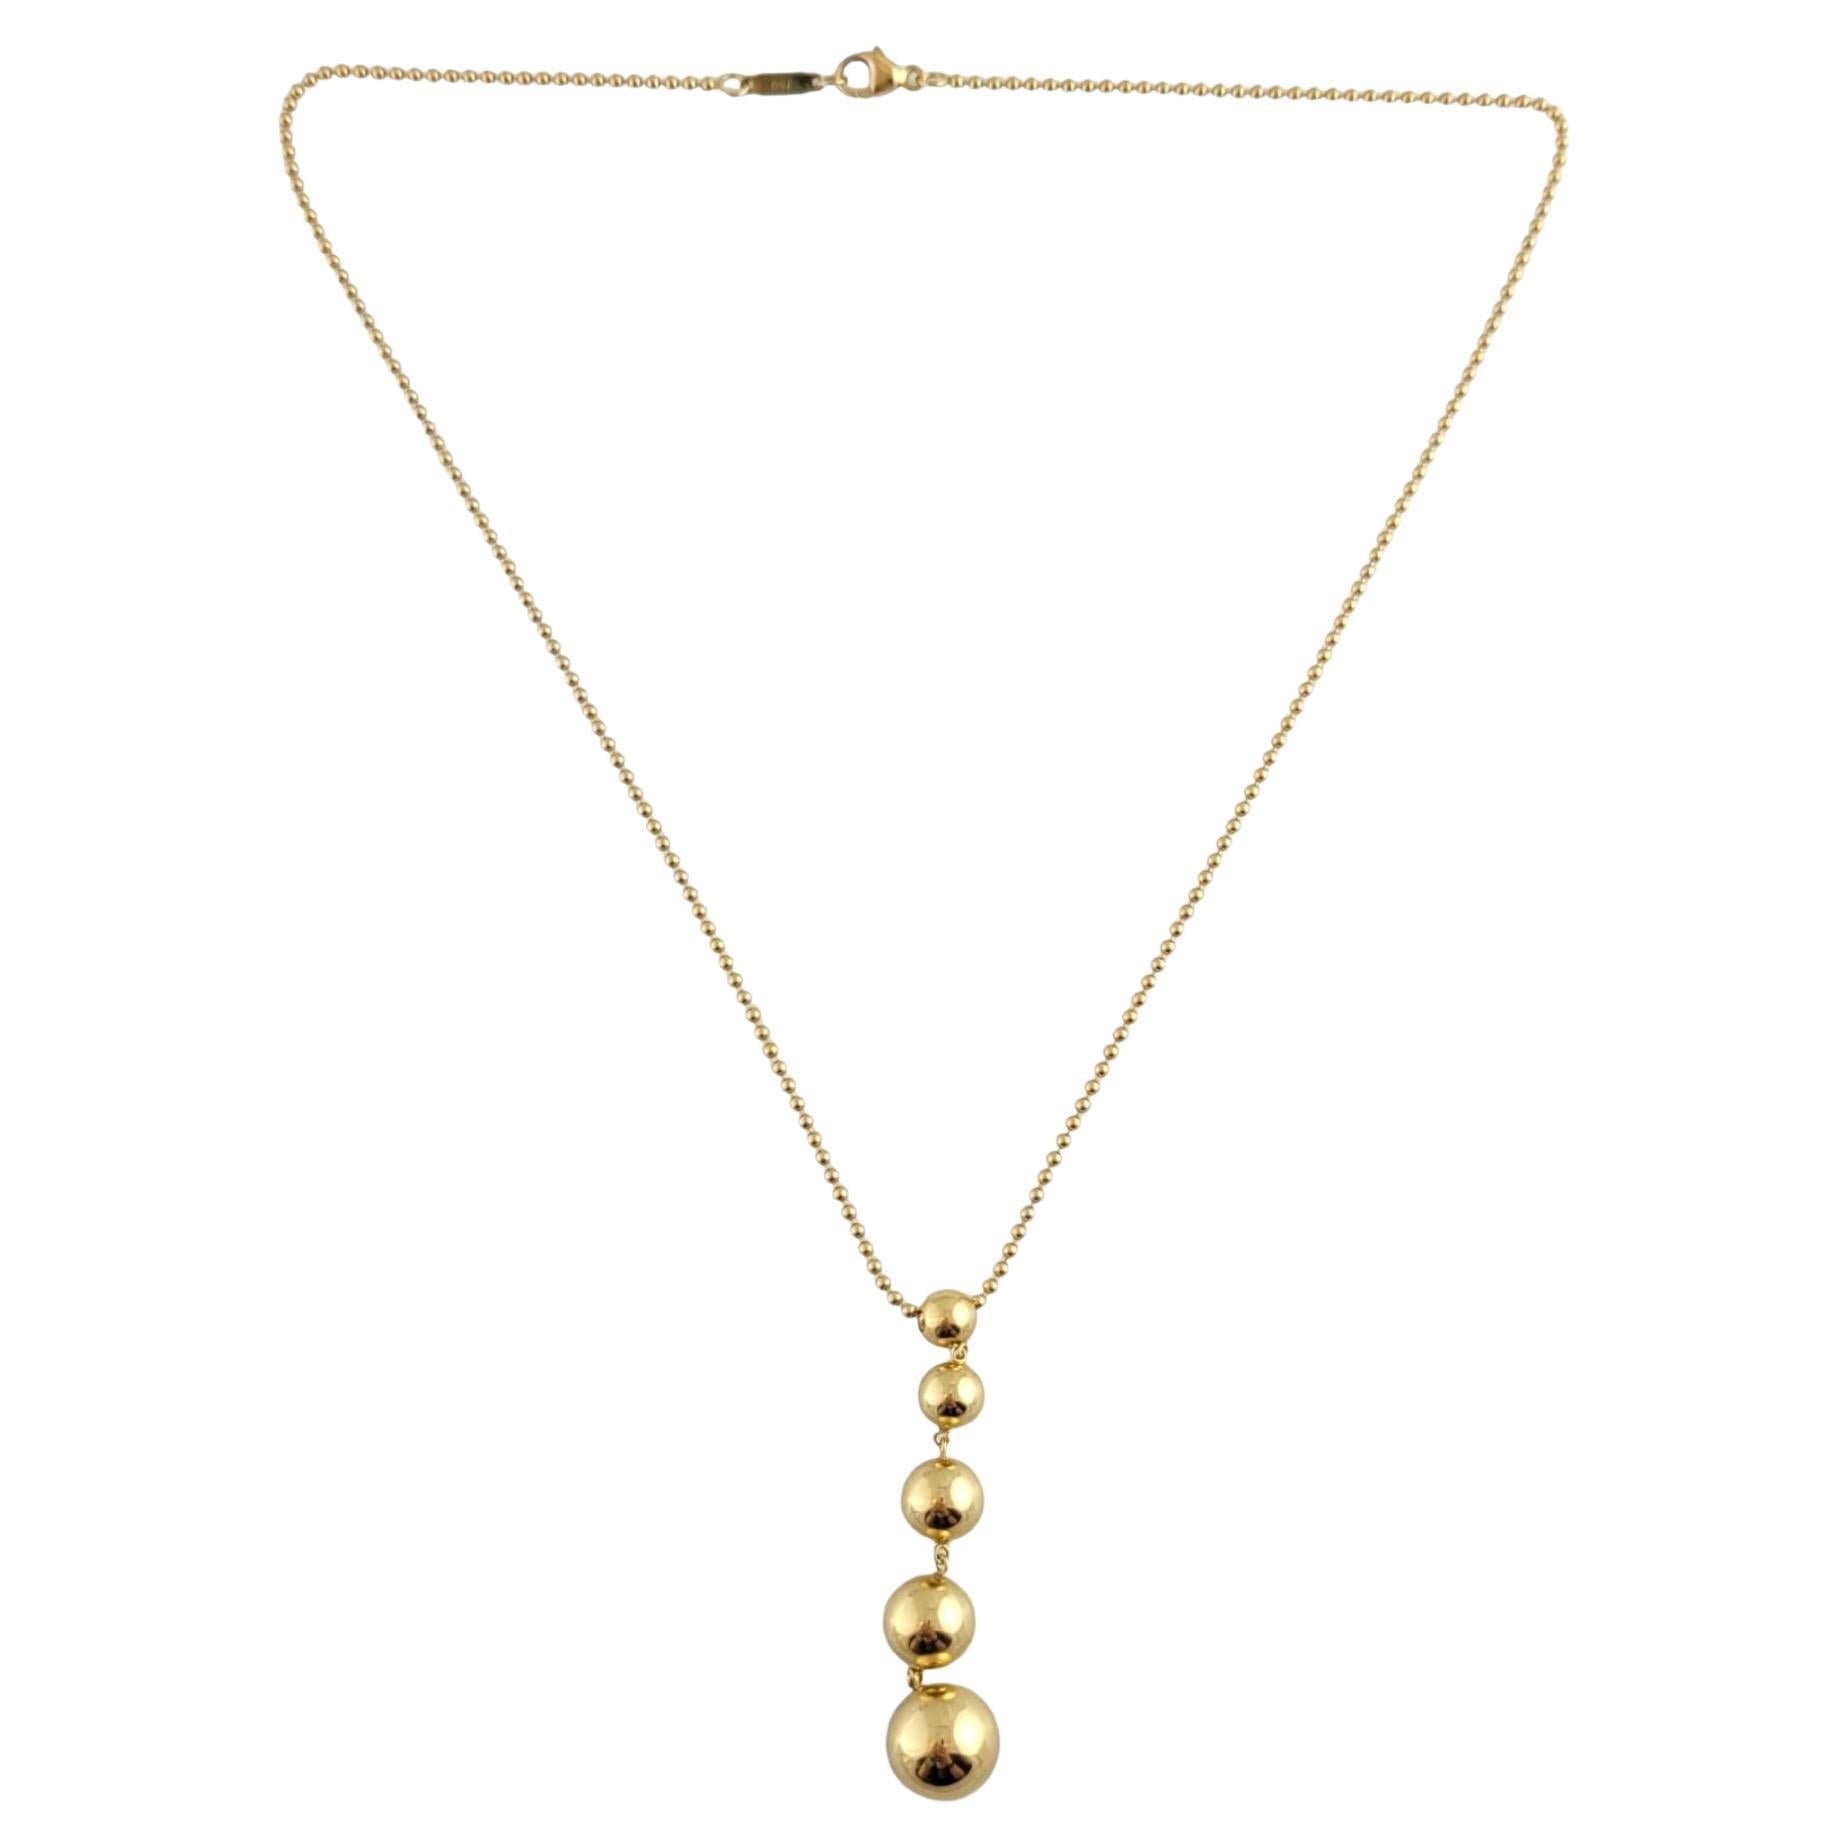 Tiffany & Co, collier pendentif en or jaune 18 carats avec perles graduées n° 14791